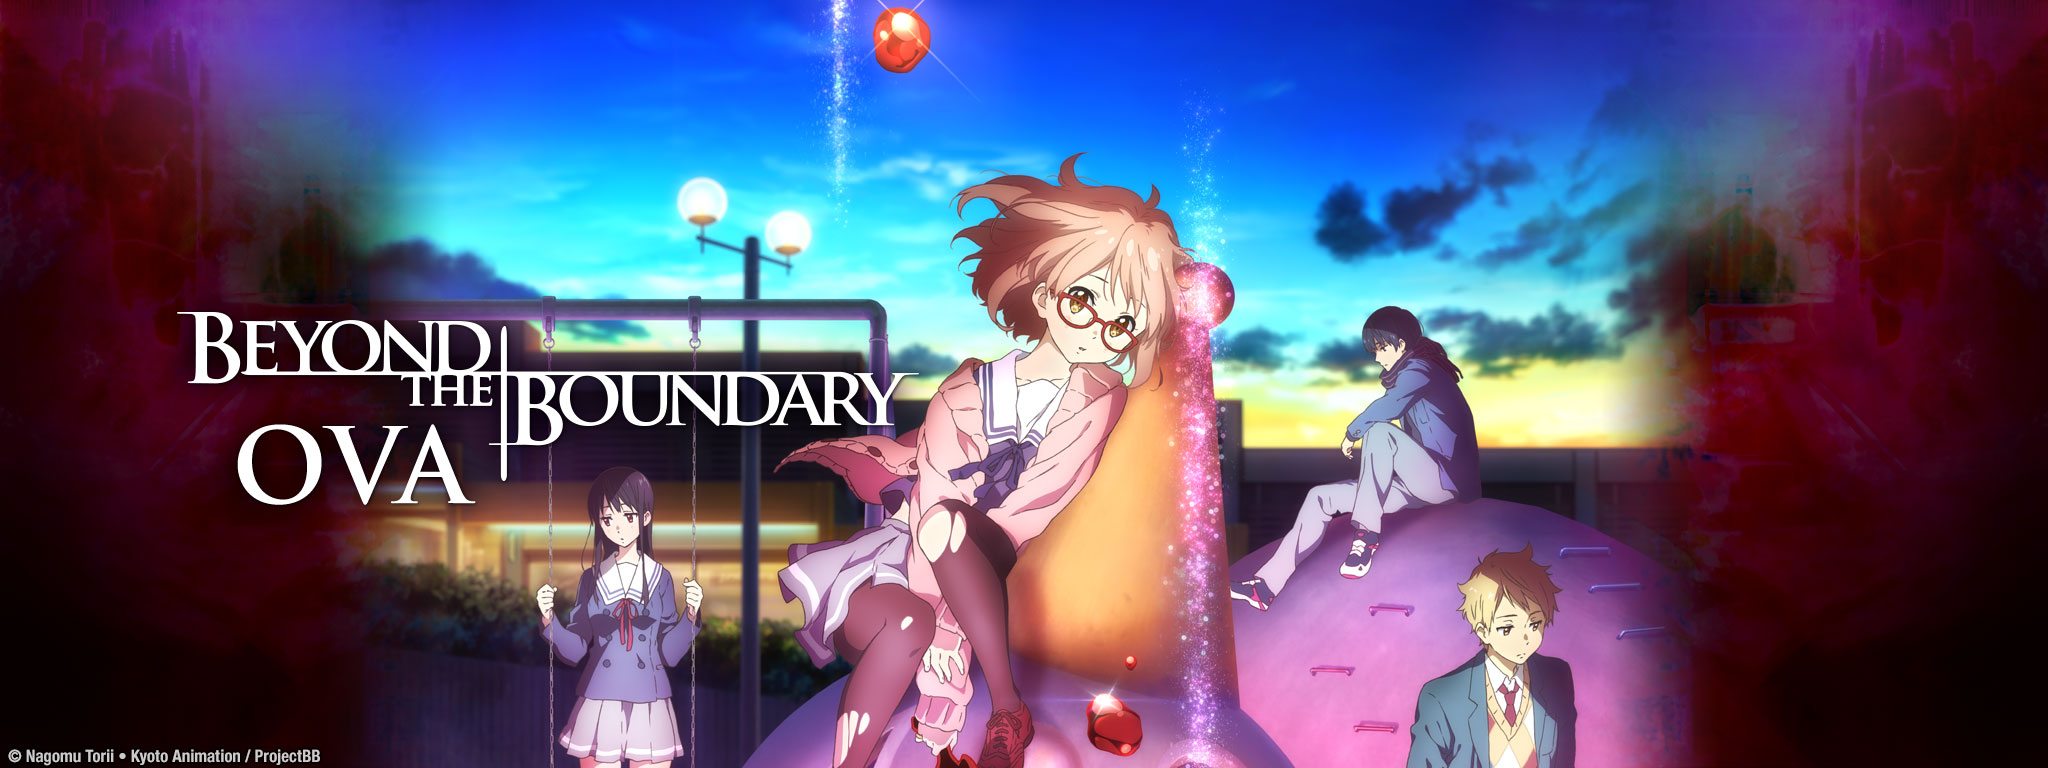 Title Art for Beyond the Boundary OVA